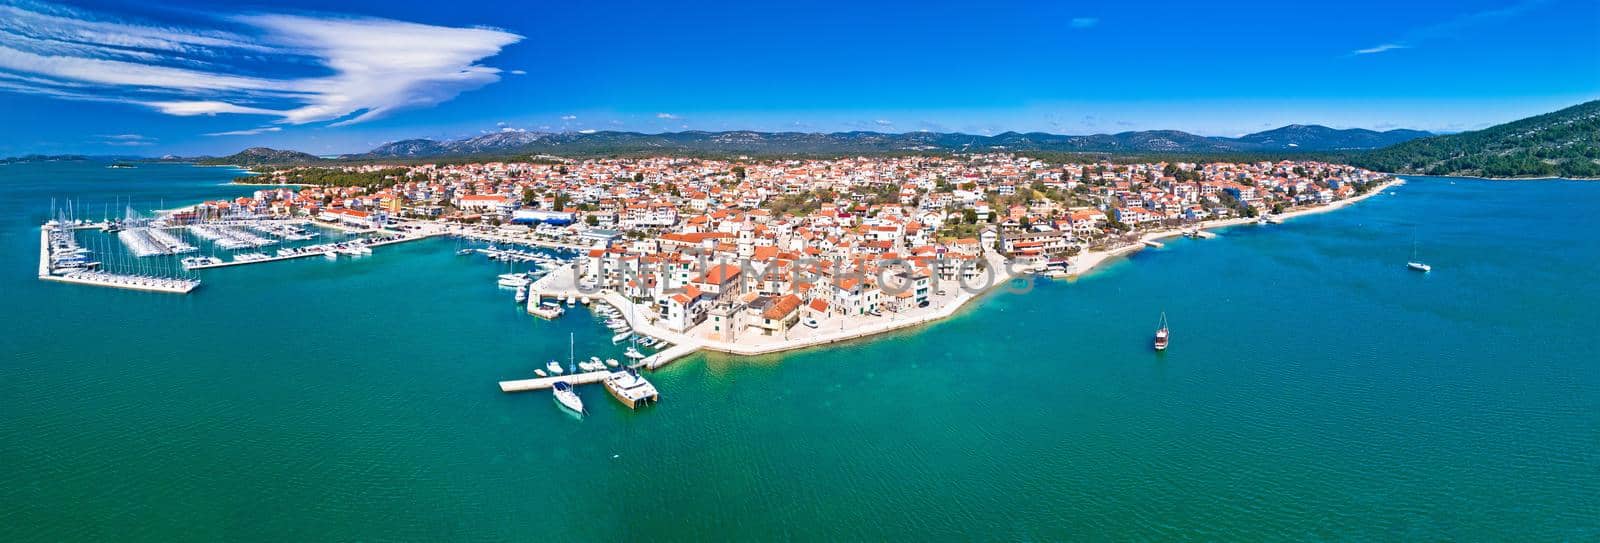 Town of Pirovac coastline aerial panoramic view by xbrchx